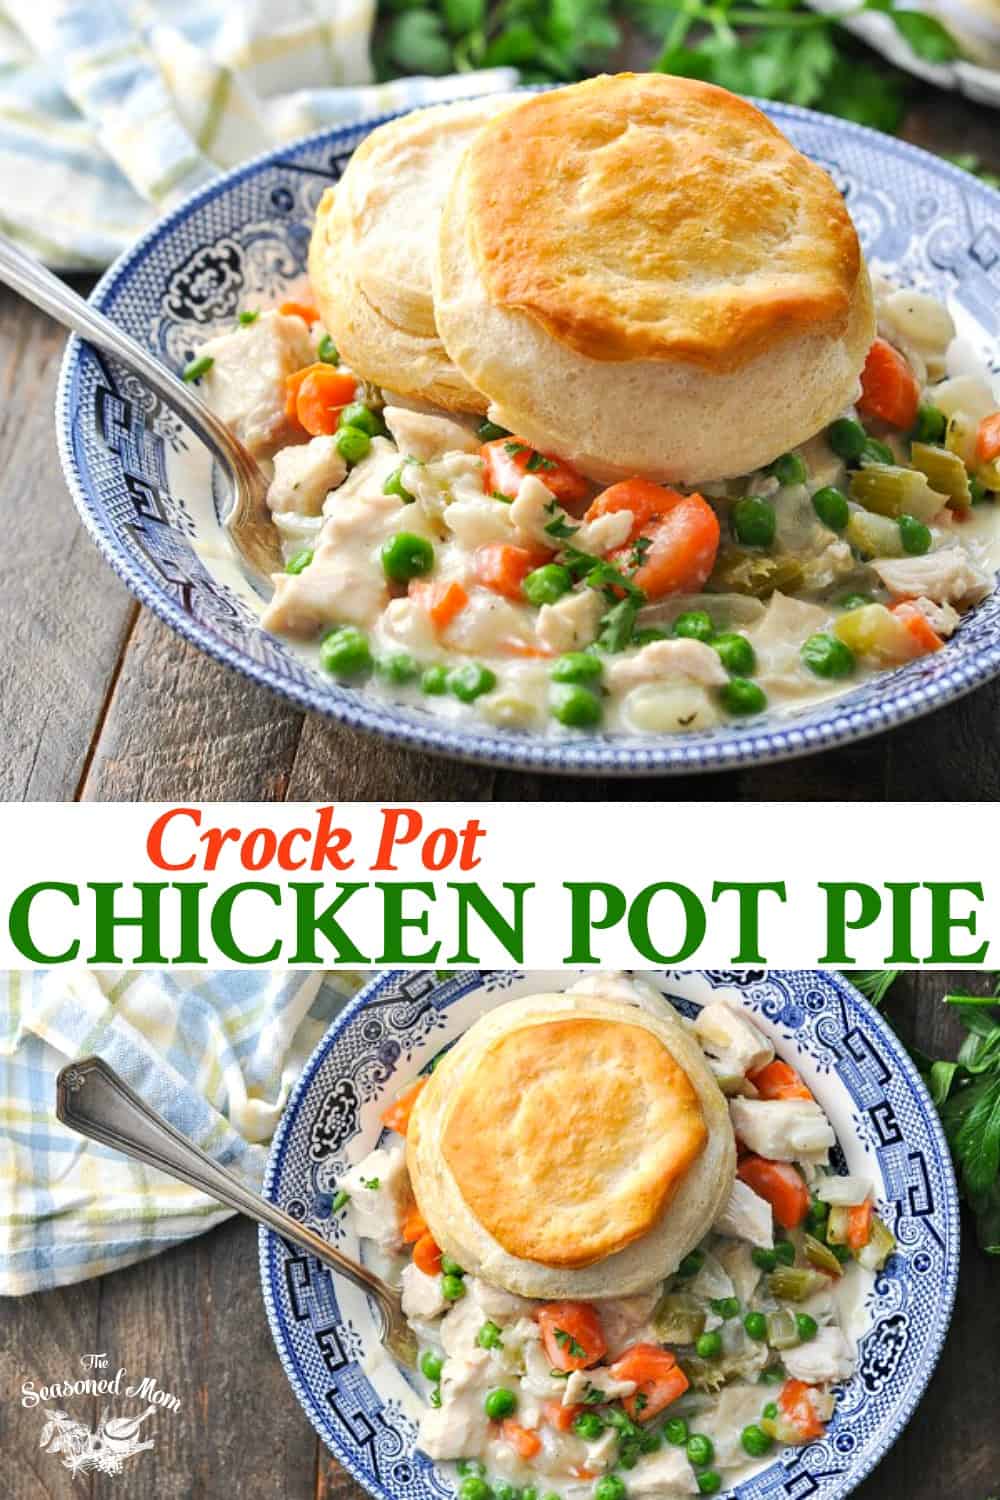 Crock Pot Chicken Pot Pie - The Seasoned Mom